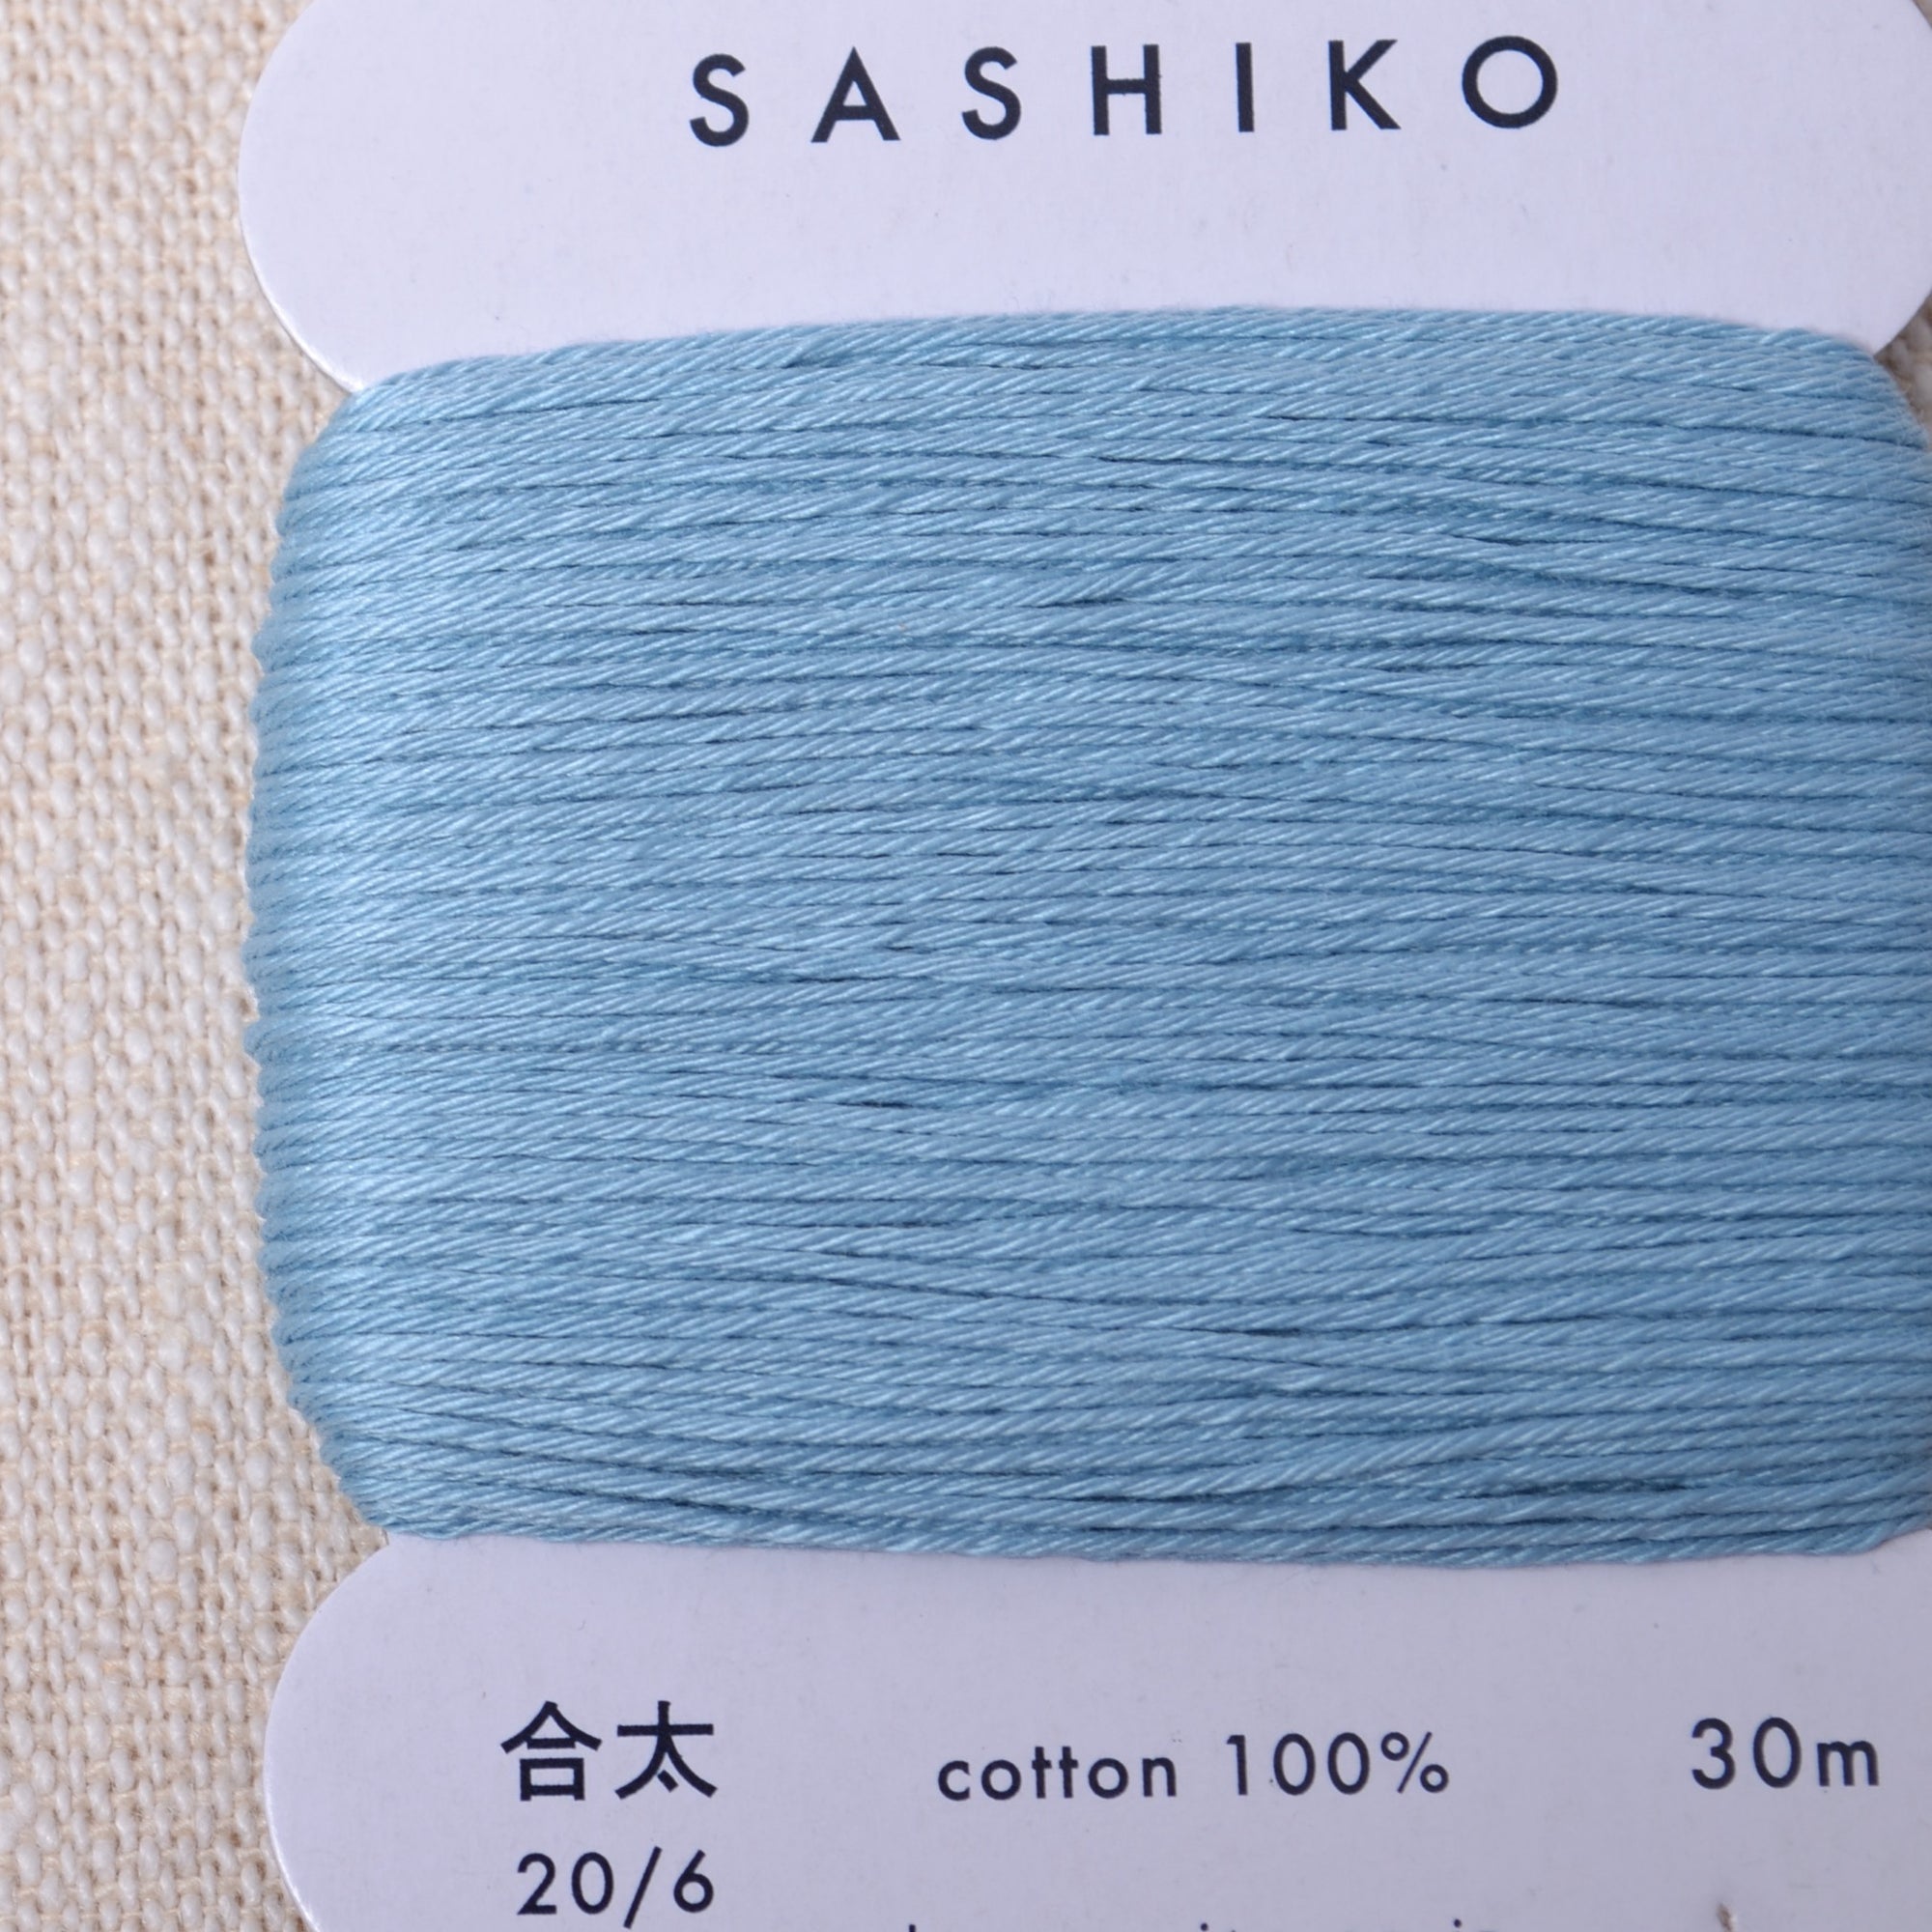 Daruma thin sashiko thread, water blue (#226) - Maydel